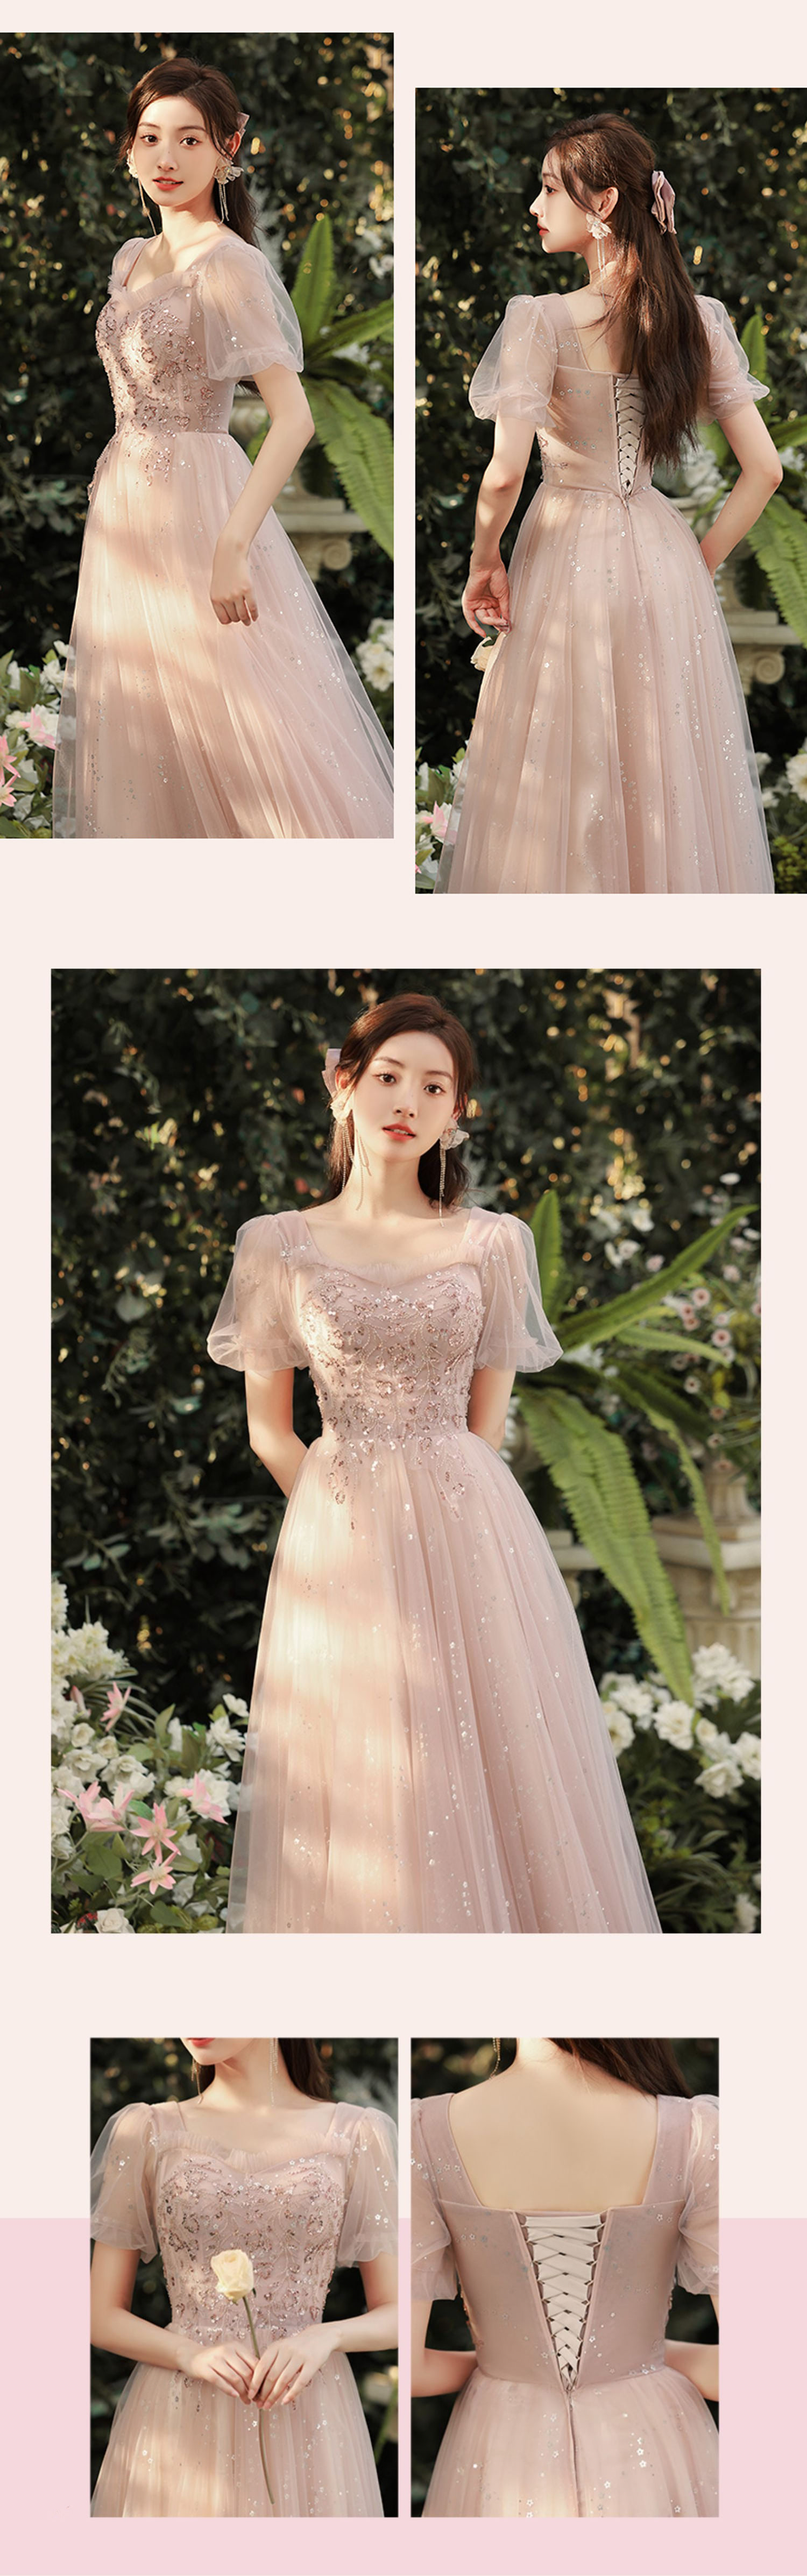 Aesthetic-Pink-Bridal-Wedding-Party-Bridesmaid-Long-Maxi-Dress22.jpg